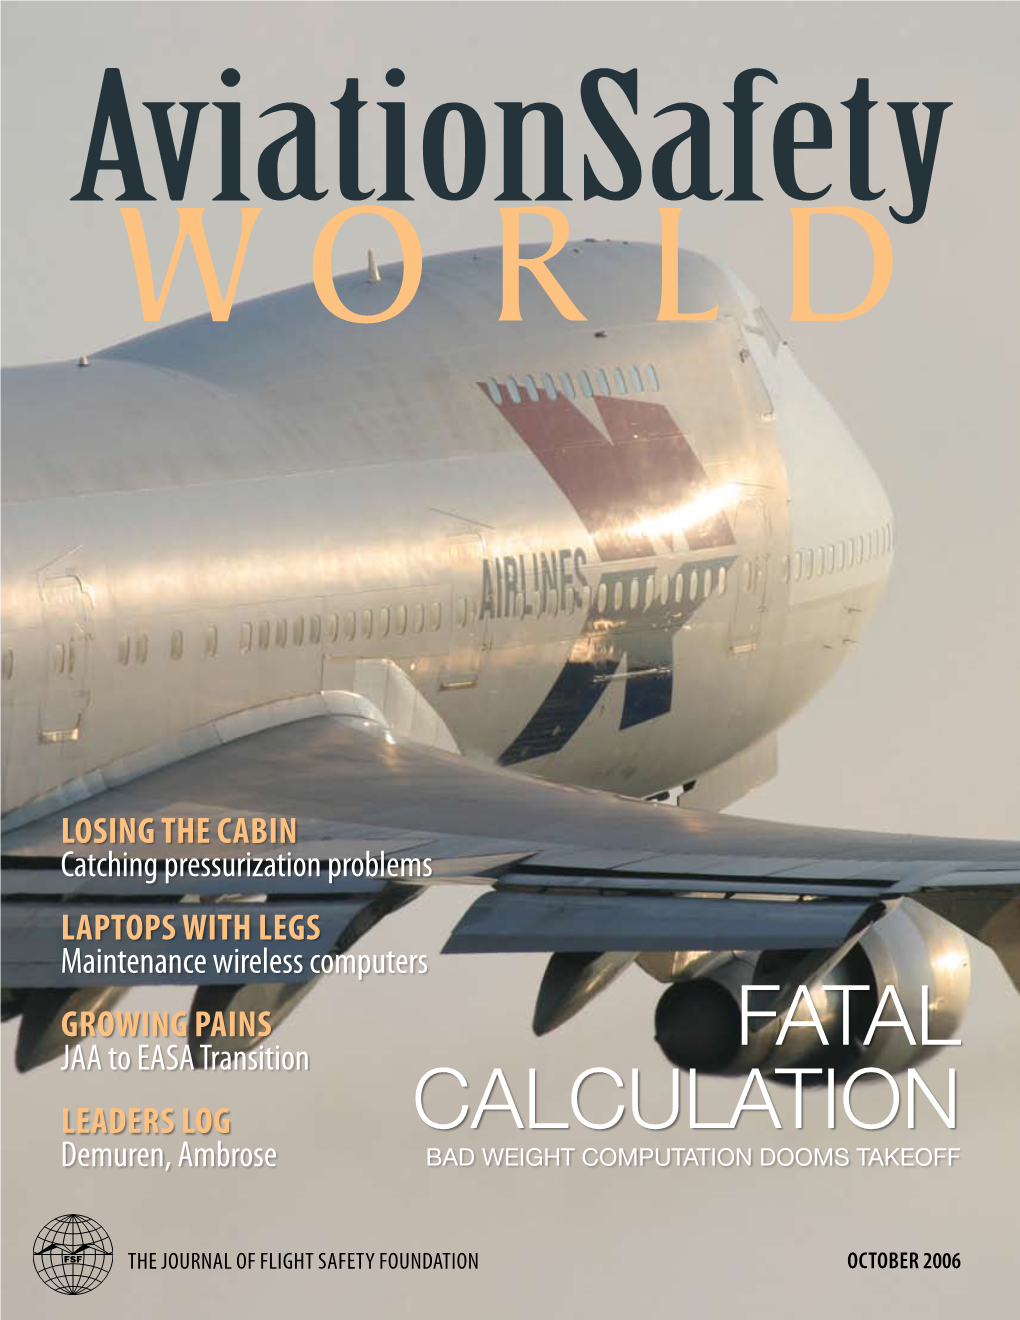 Aviation Safety World, October 2006